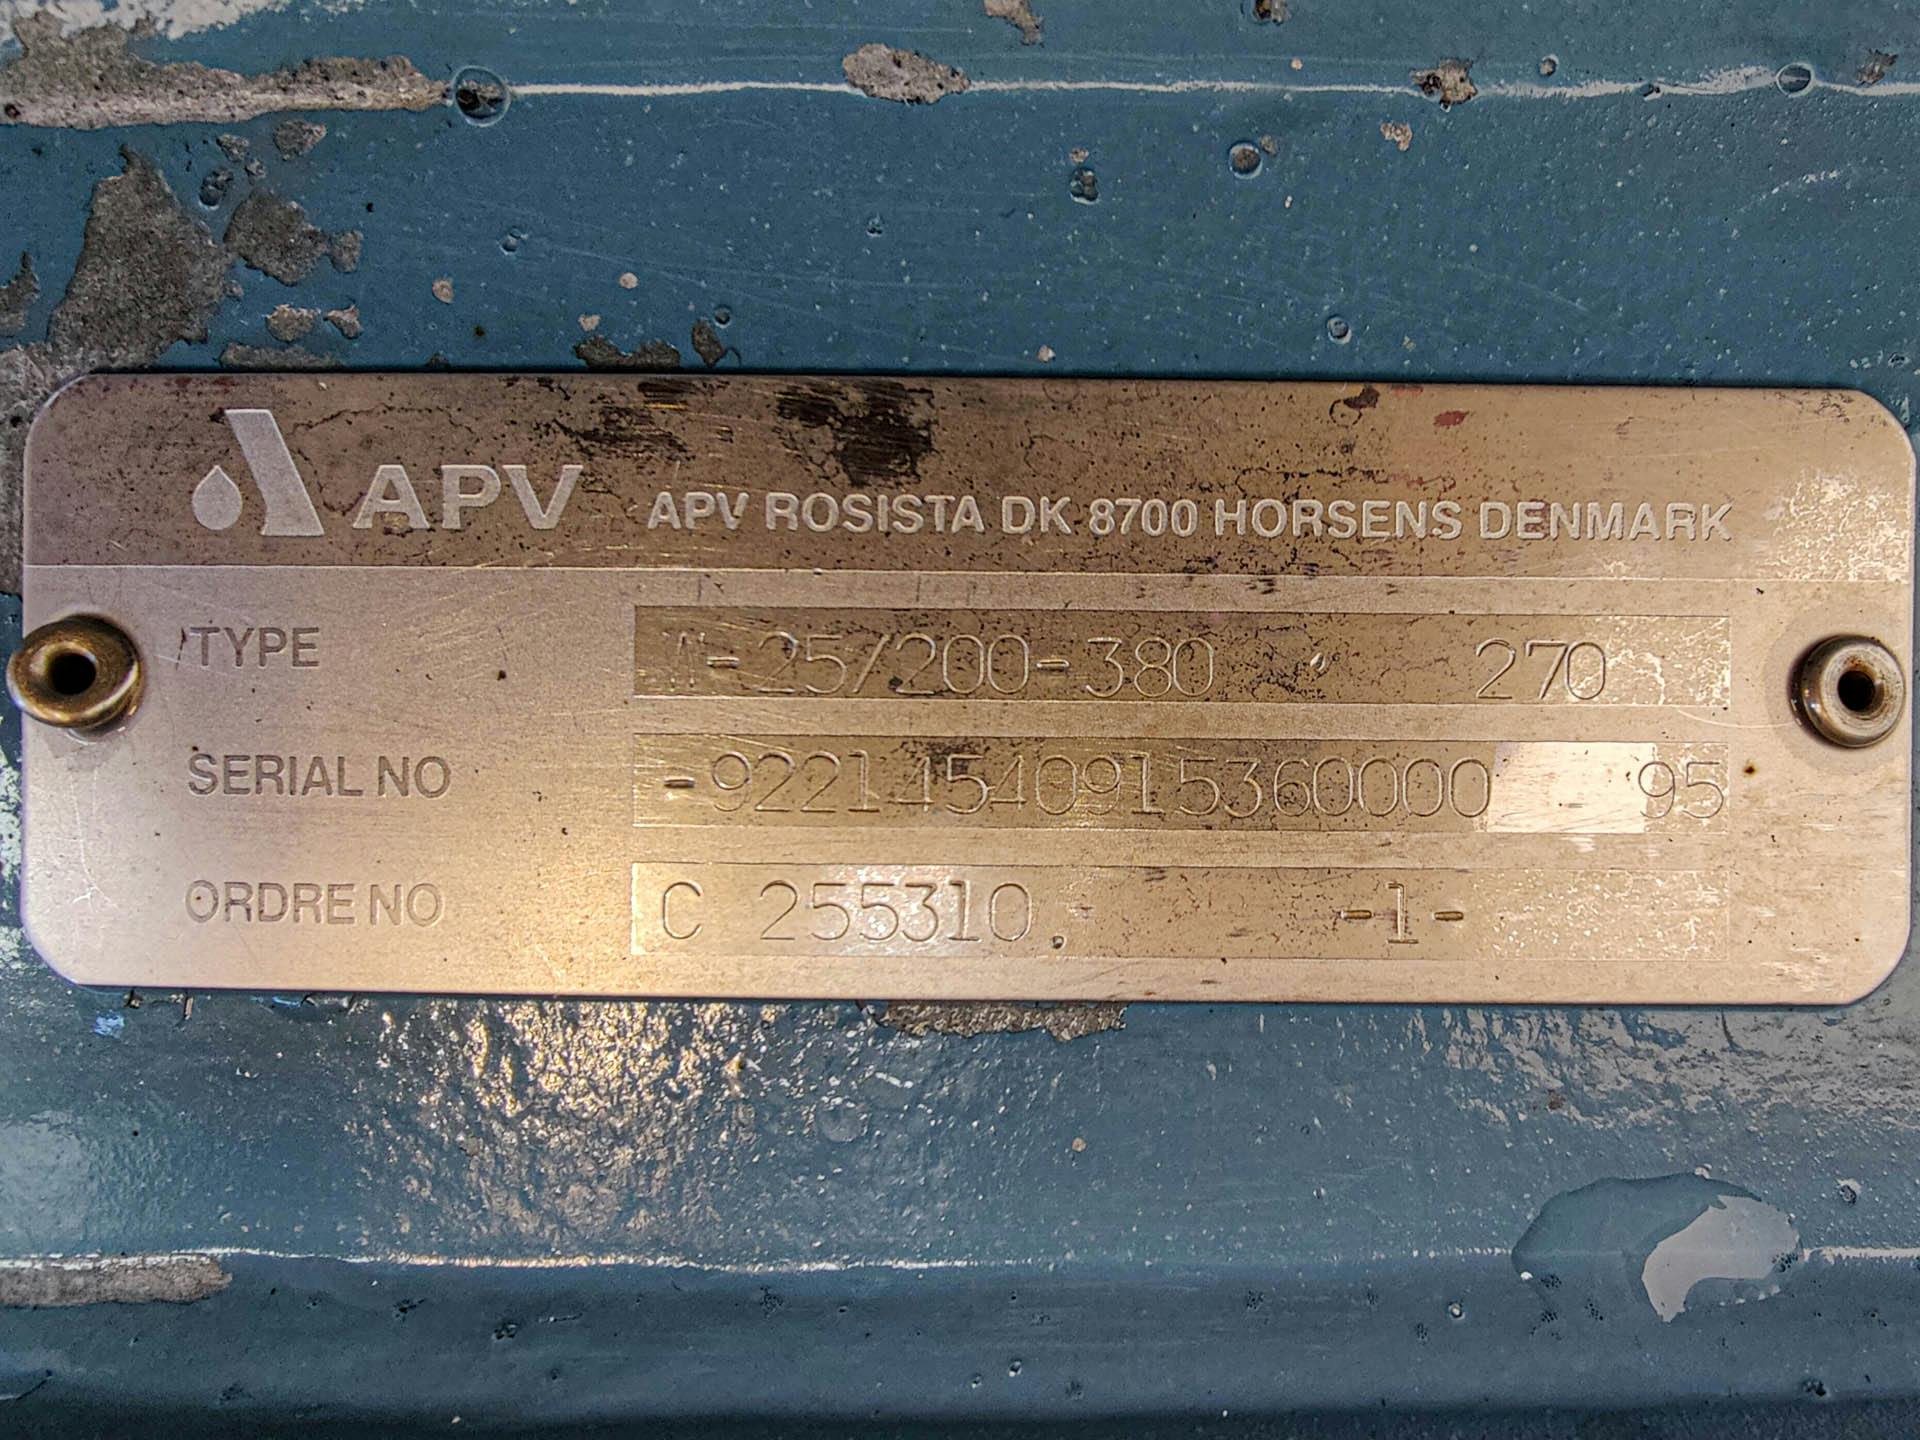 APV Rosista W-25/200-380 - Centrifugaalpomp - image 6